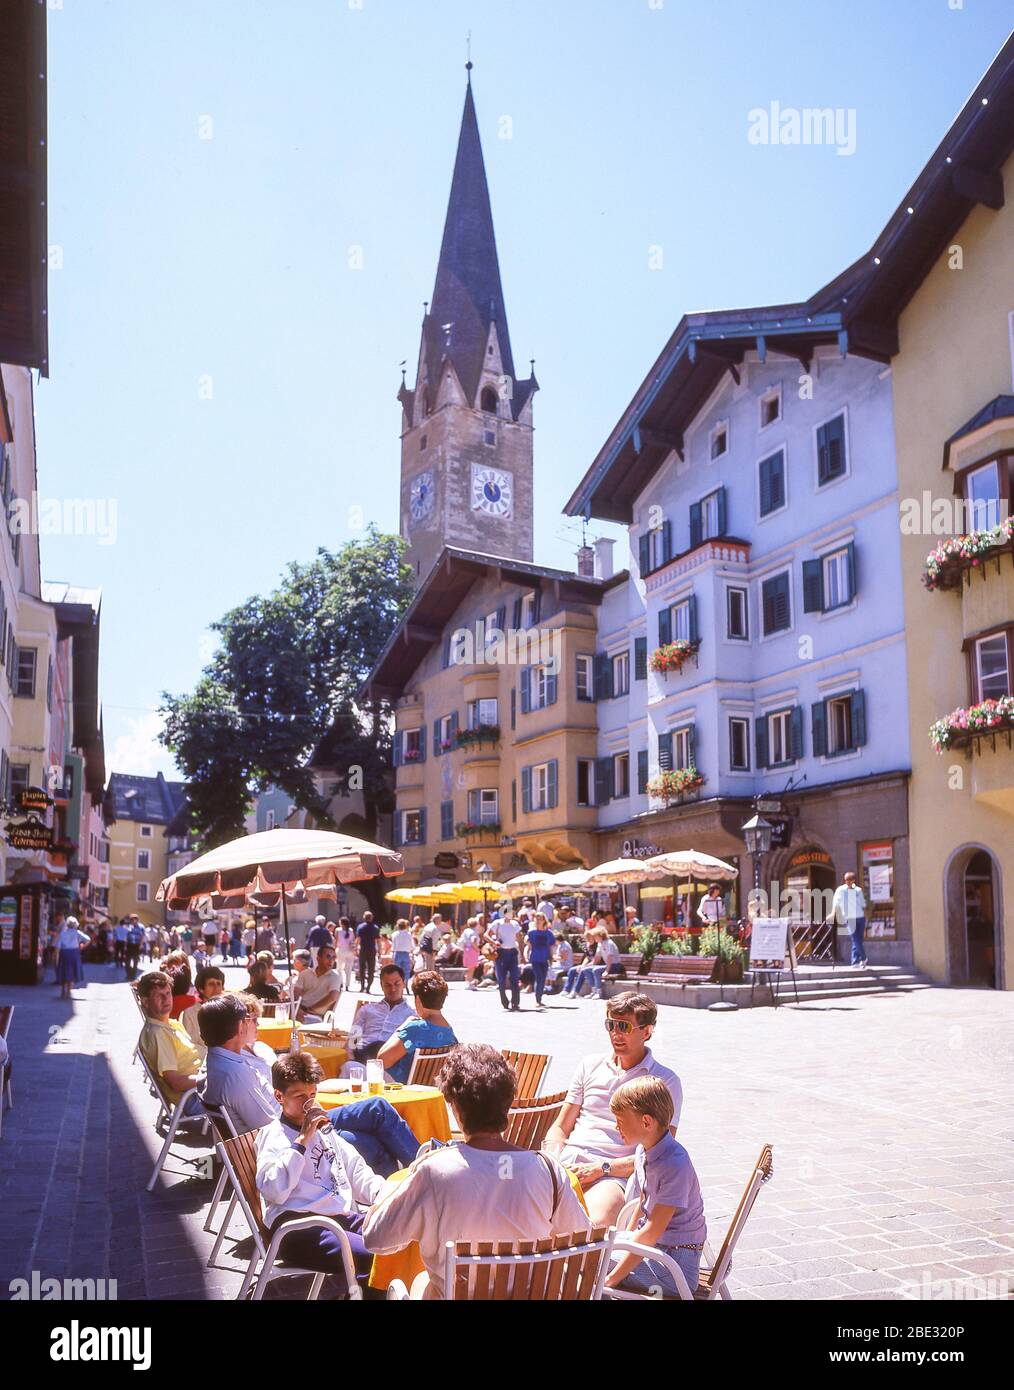 Ristoranti all'aperto, Voderstadt, Kitzbuhel, Tirolo Stato, Repubblica d'Austria Foto Stock